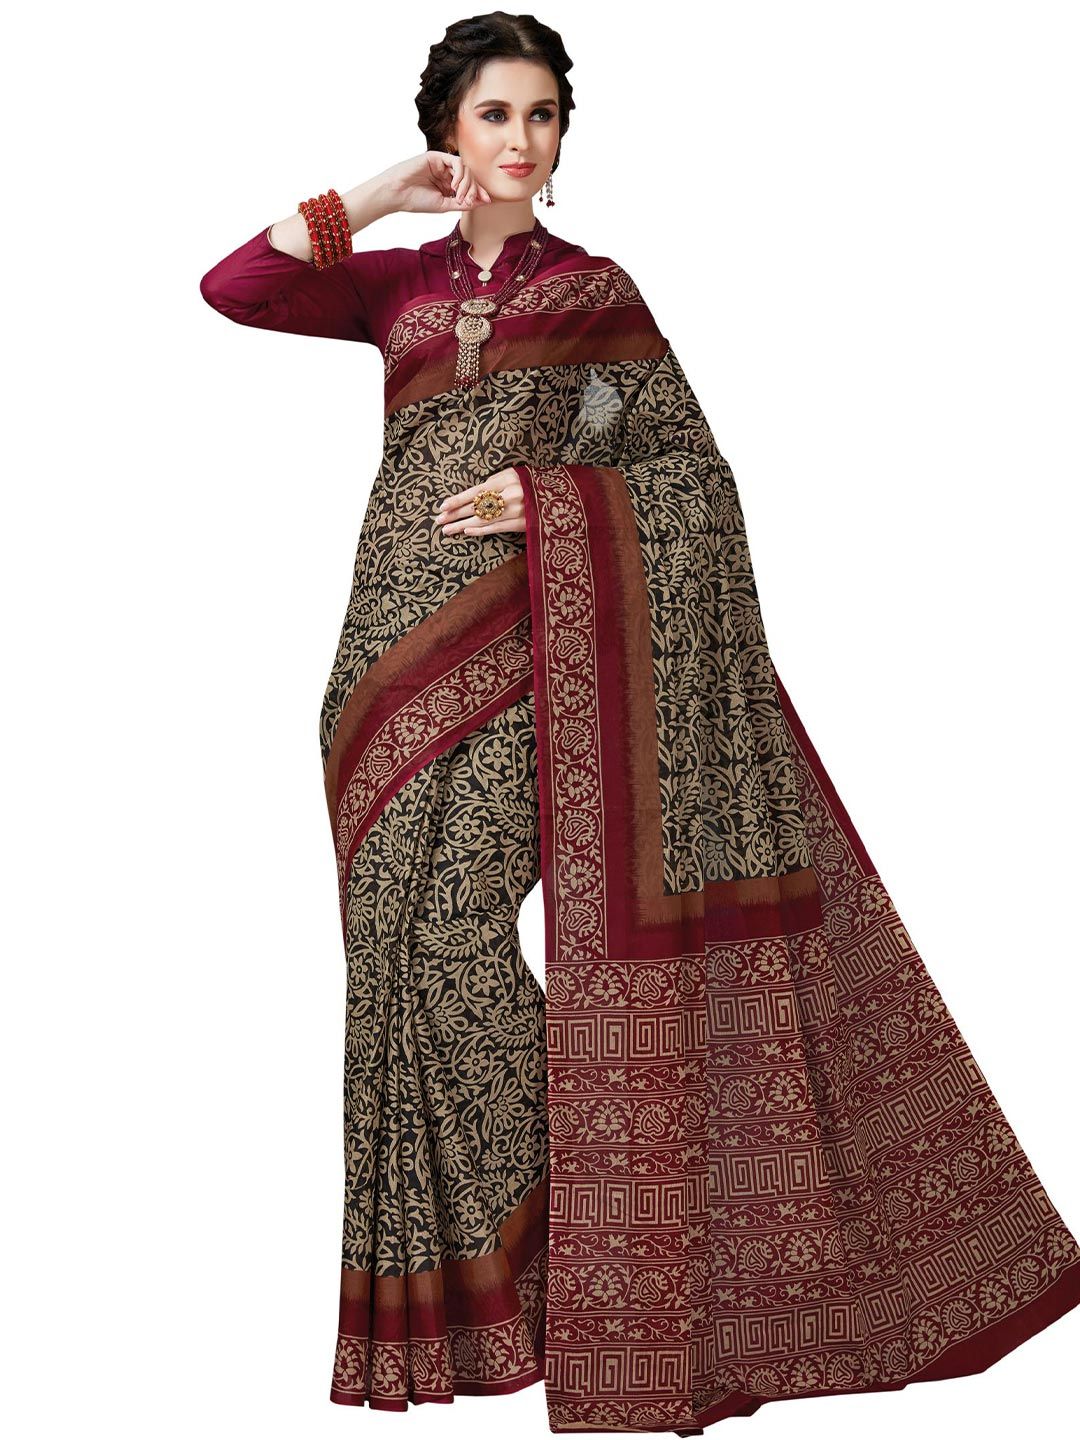 SHANVIKA Black & Maroon Floral Pure Cotton Block Print Saree Price in India